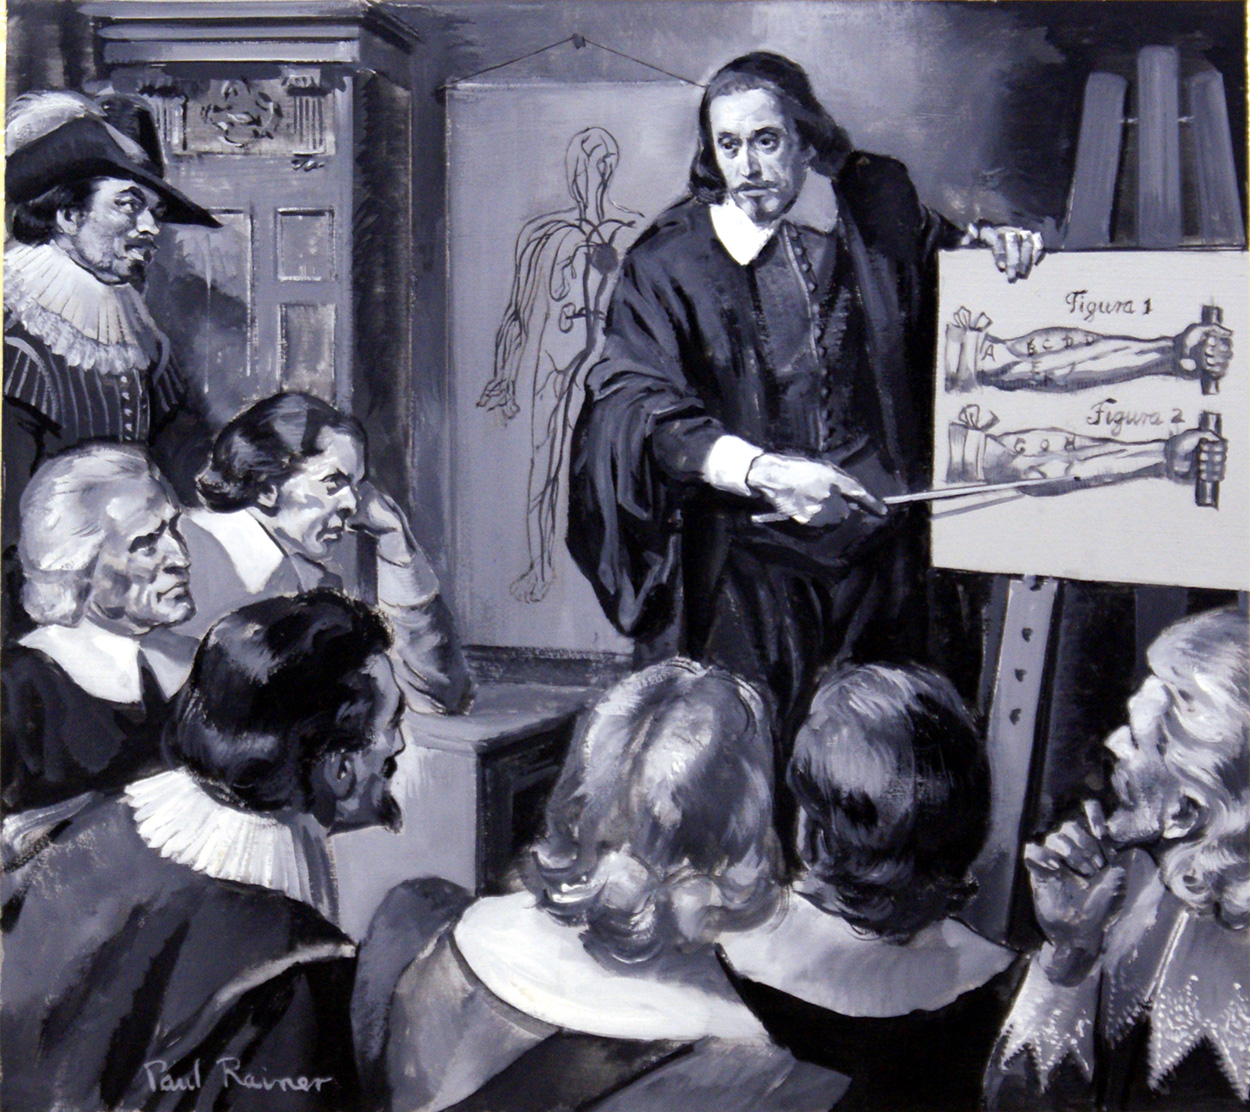 William Harvey: Man of Medicine (Original) (Signed) art by Paul Rainer at The Illustration Art Gallery